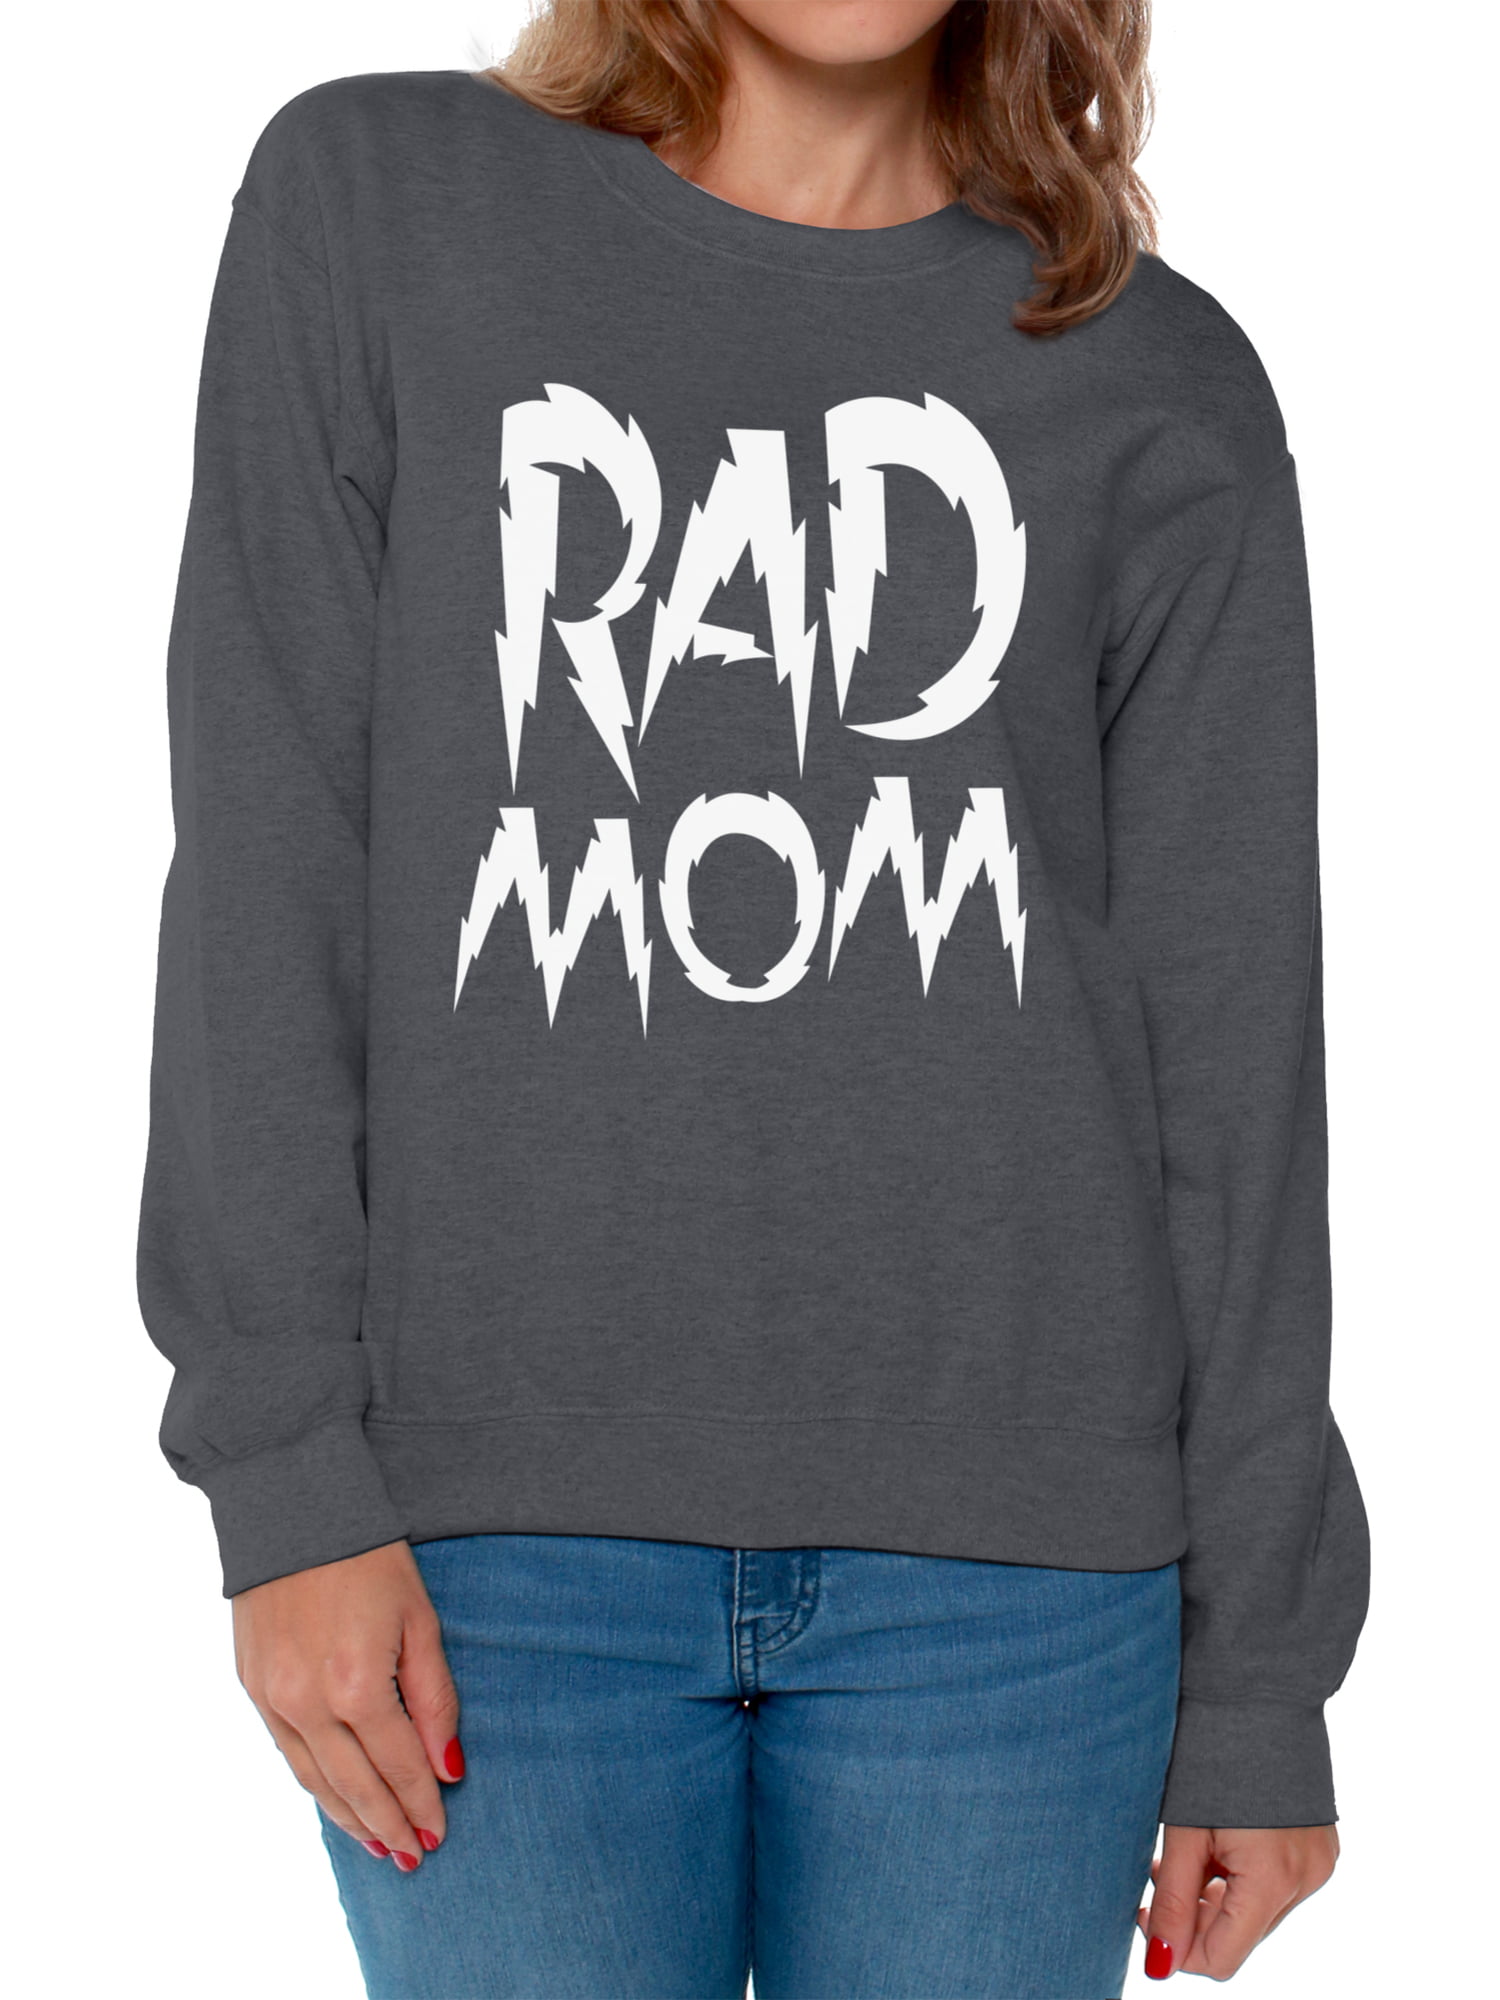 Awkward Styles Women's Rad Mom Funny Graphic Sweatshirt Tops White ...